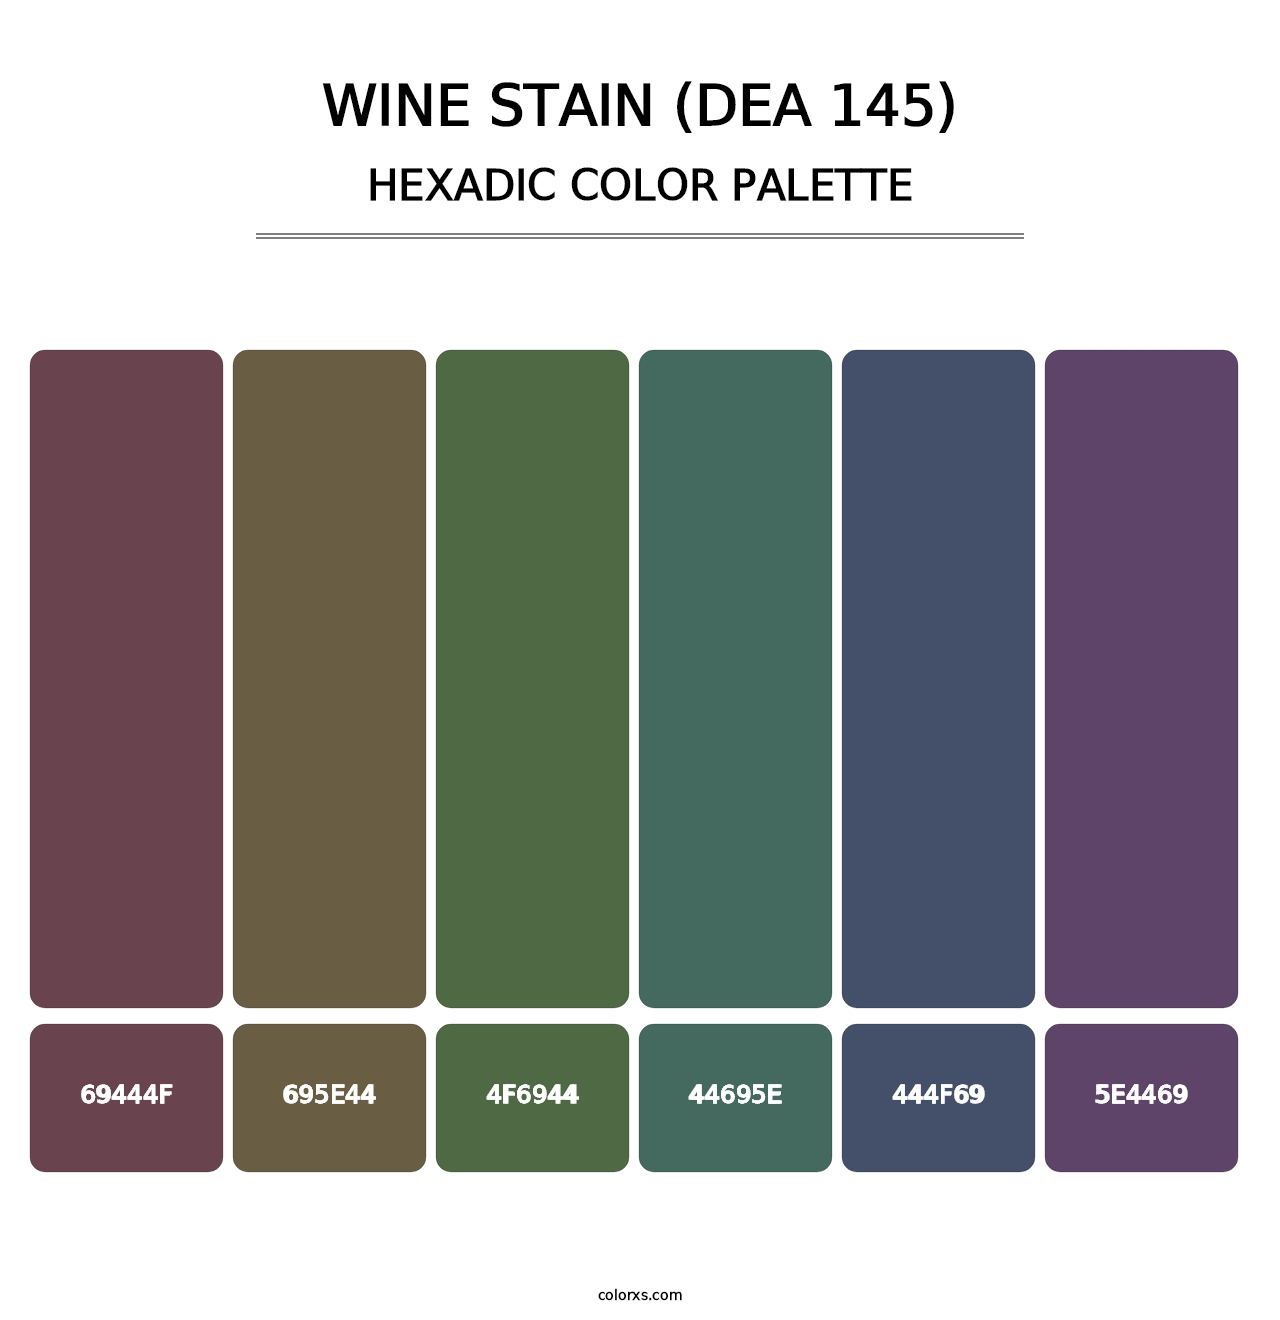 Wine Stain (DEA 145) - Hexadic Color Palette